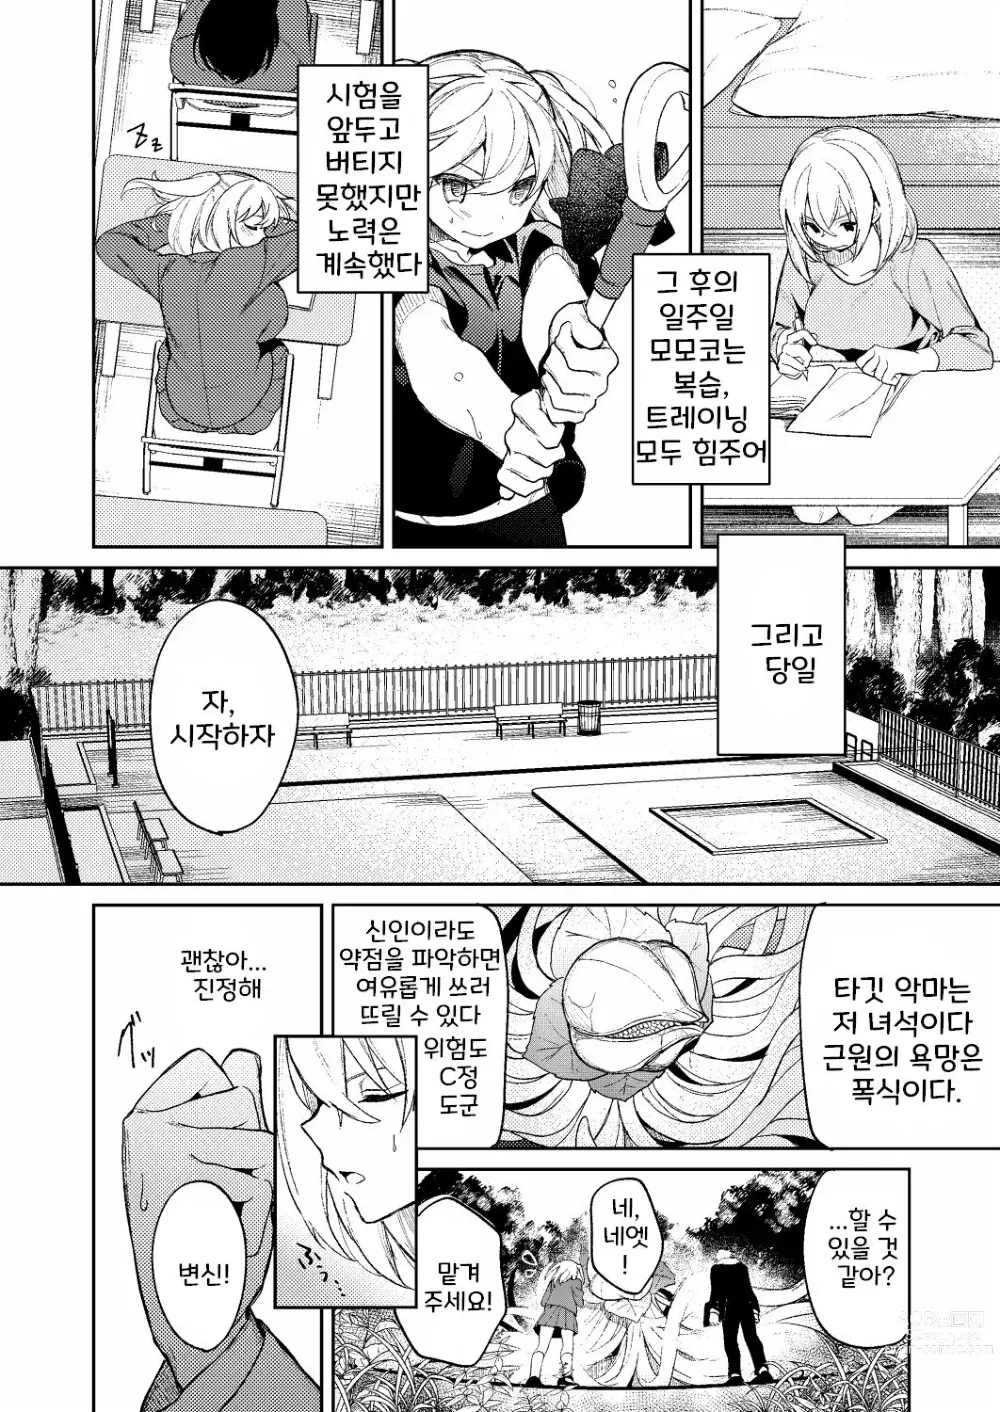 Page 8 of doujinshi ドMな魔法少女が触手に色々される話